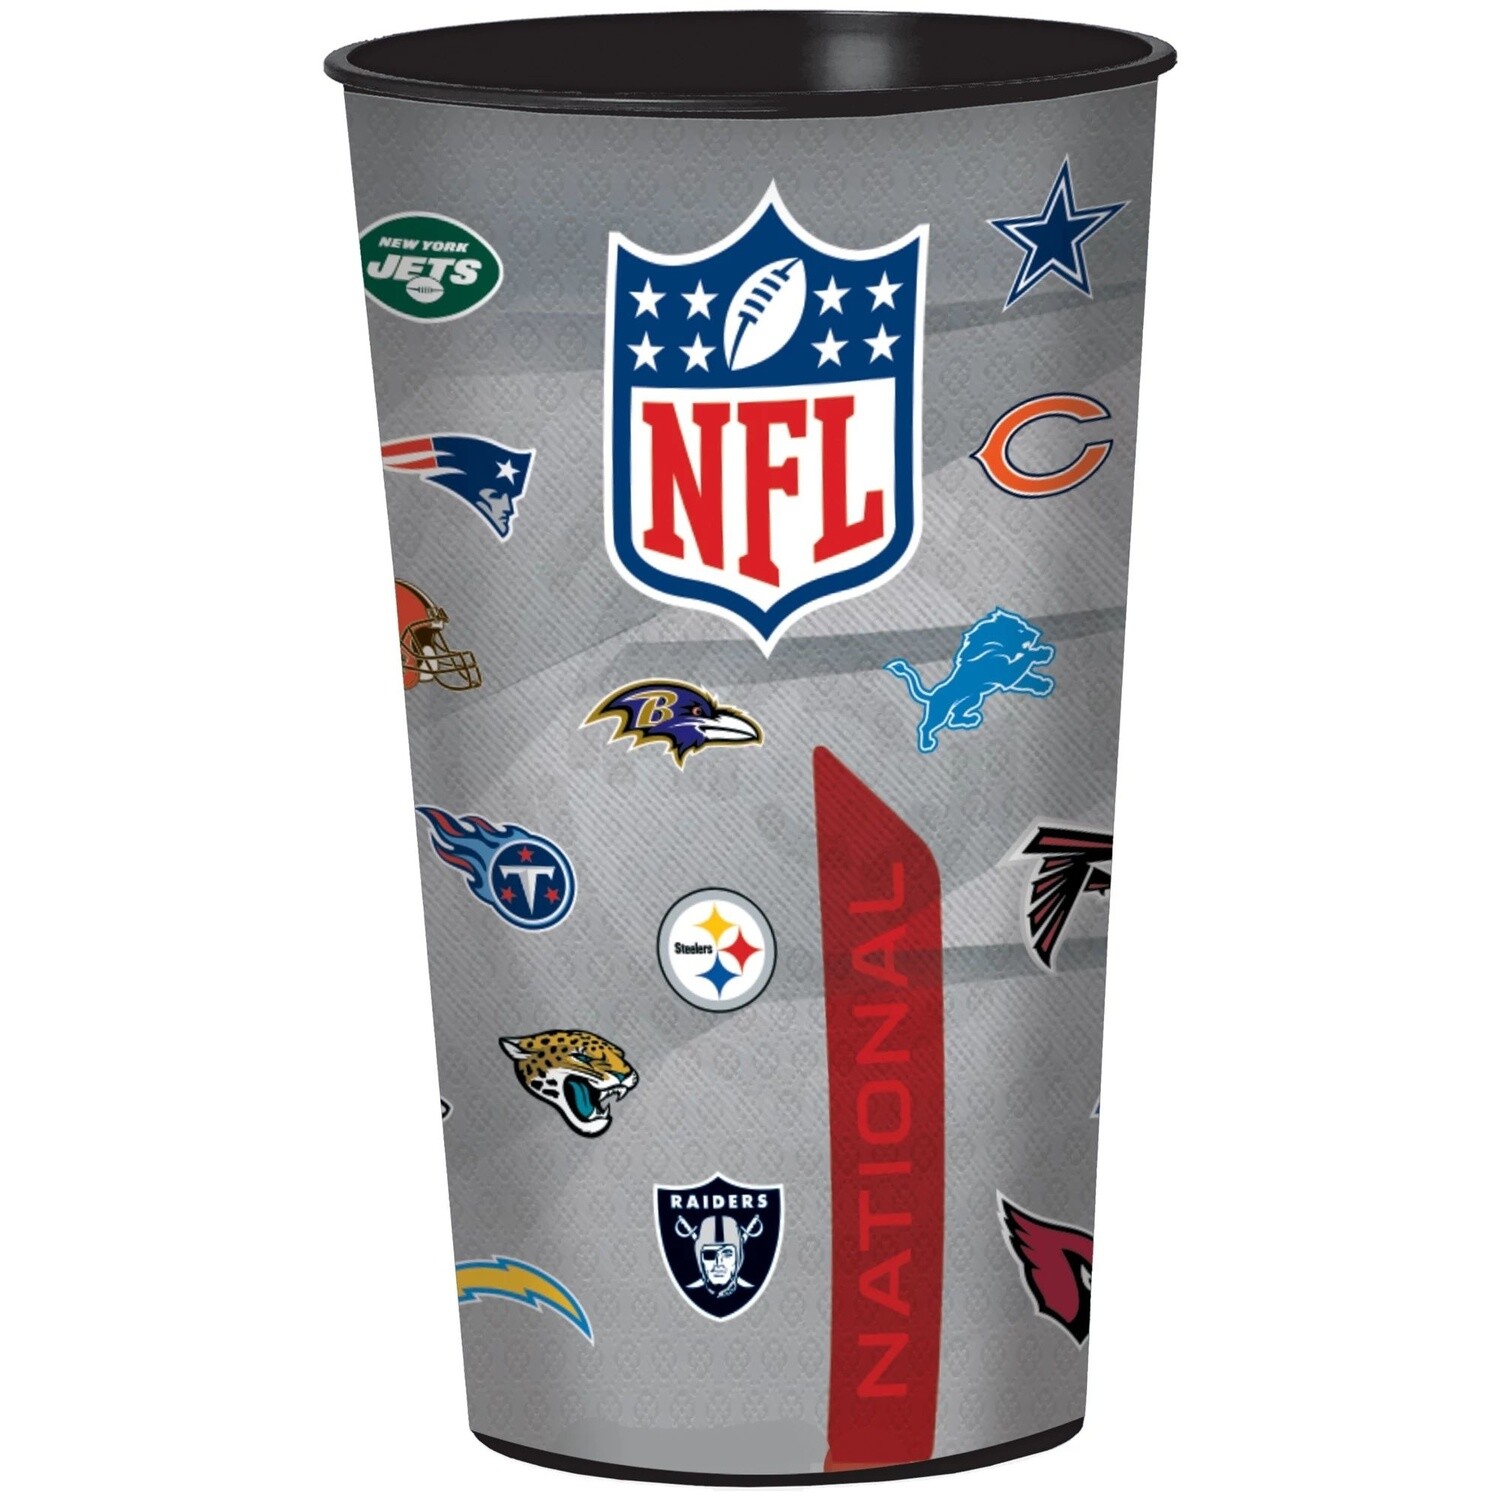 NFL Cup, 22 oz. - All Teams